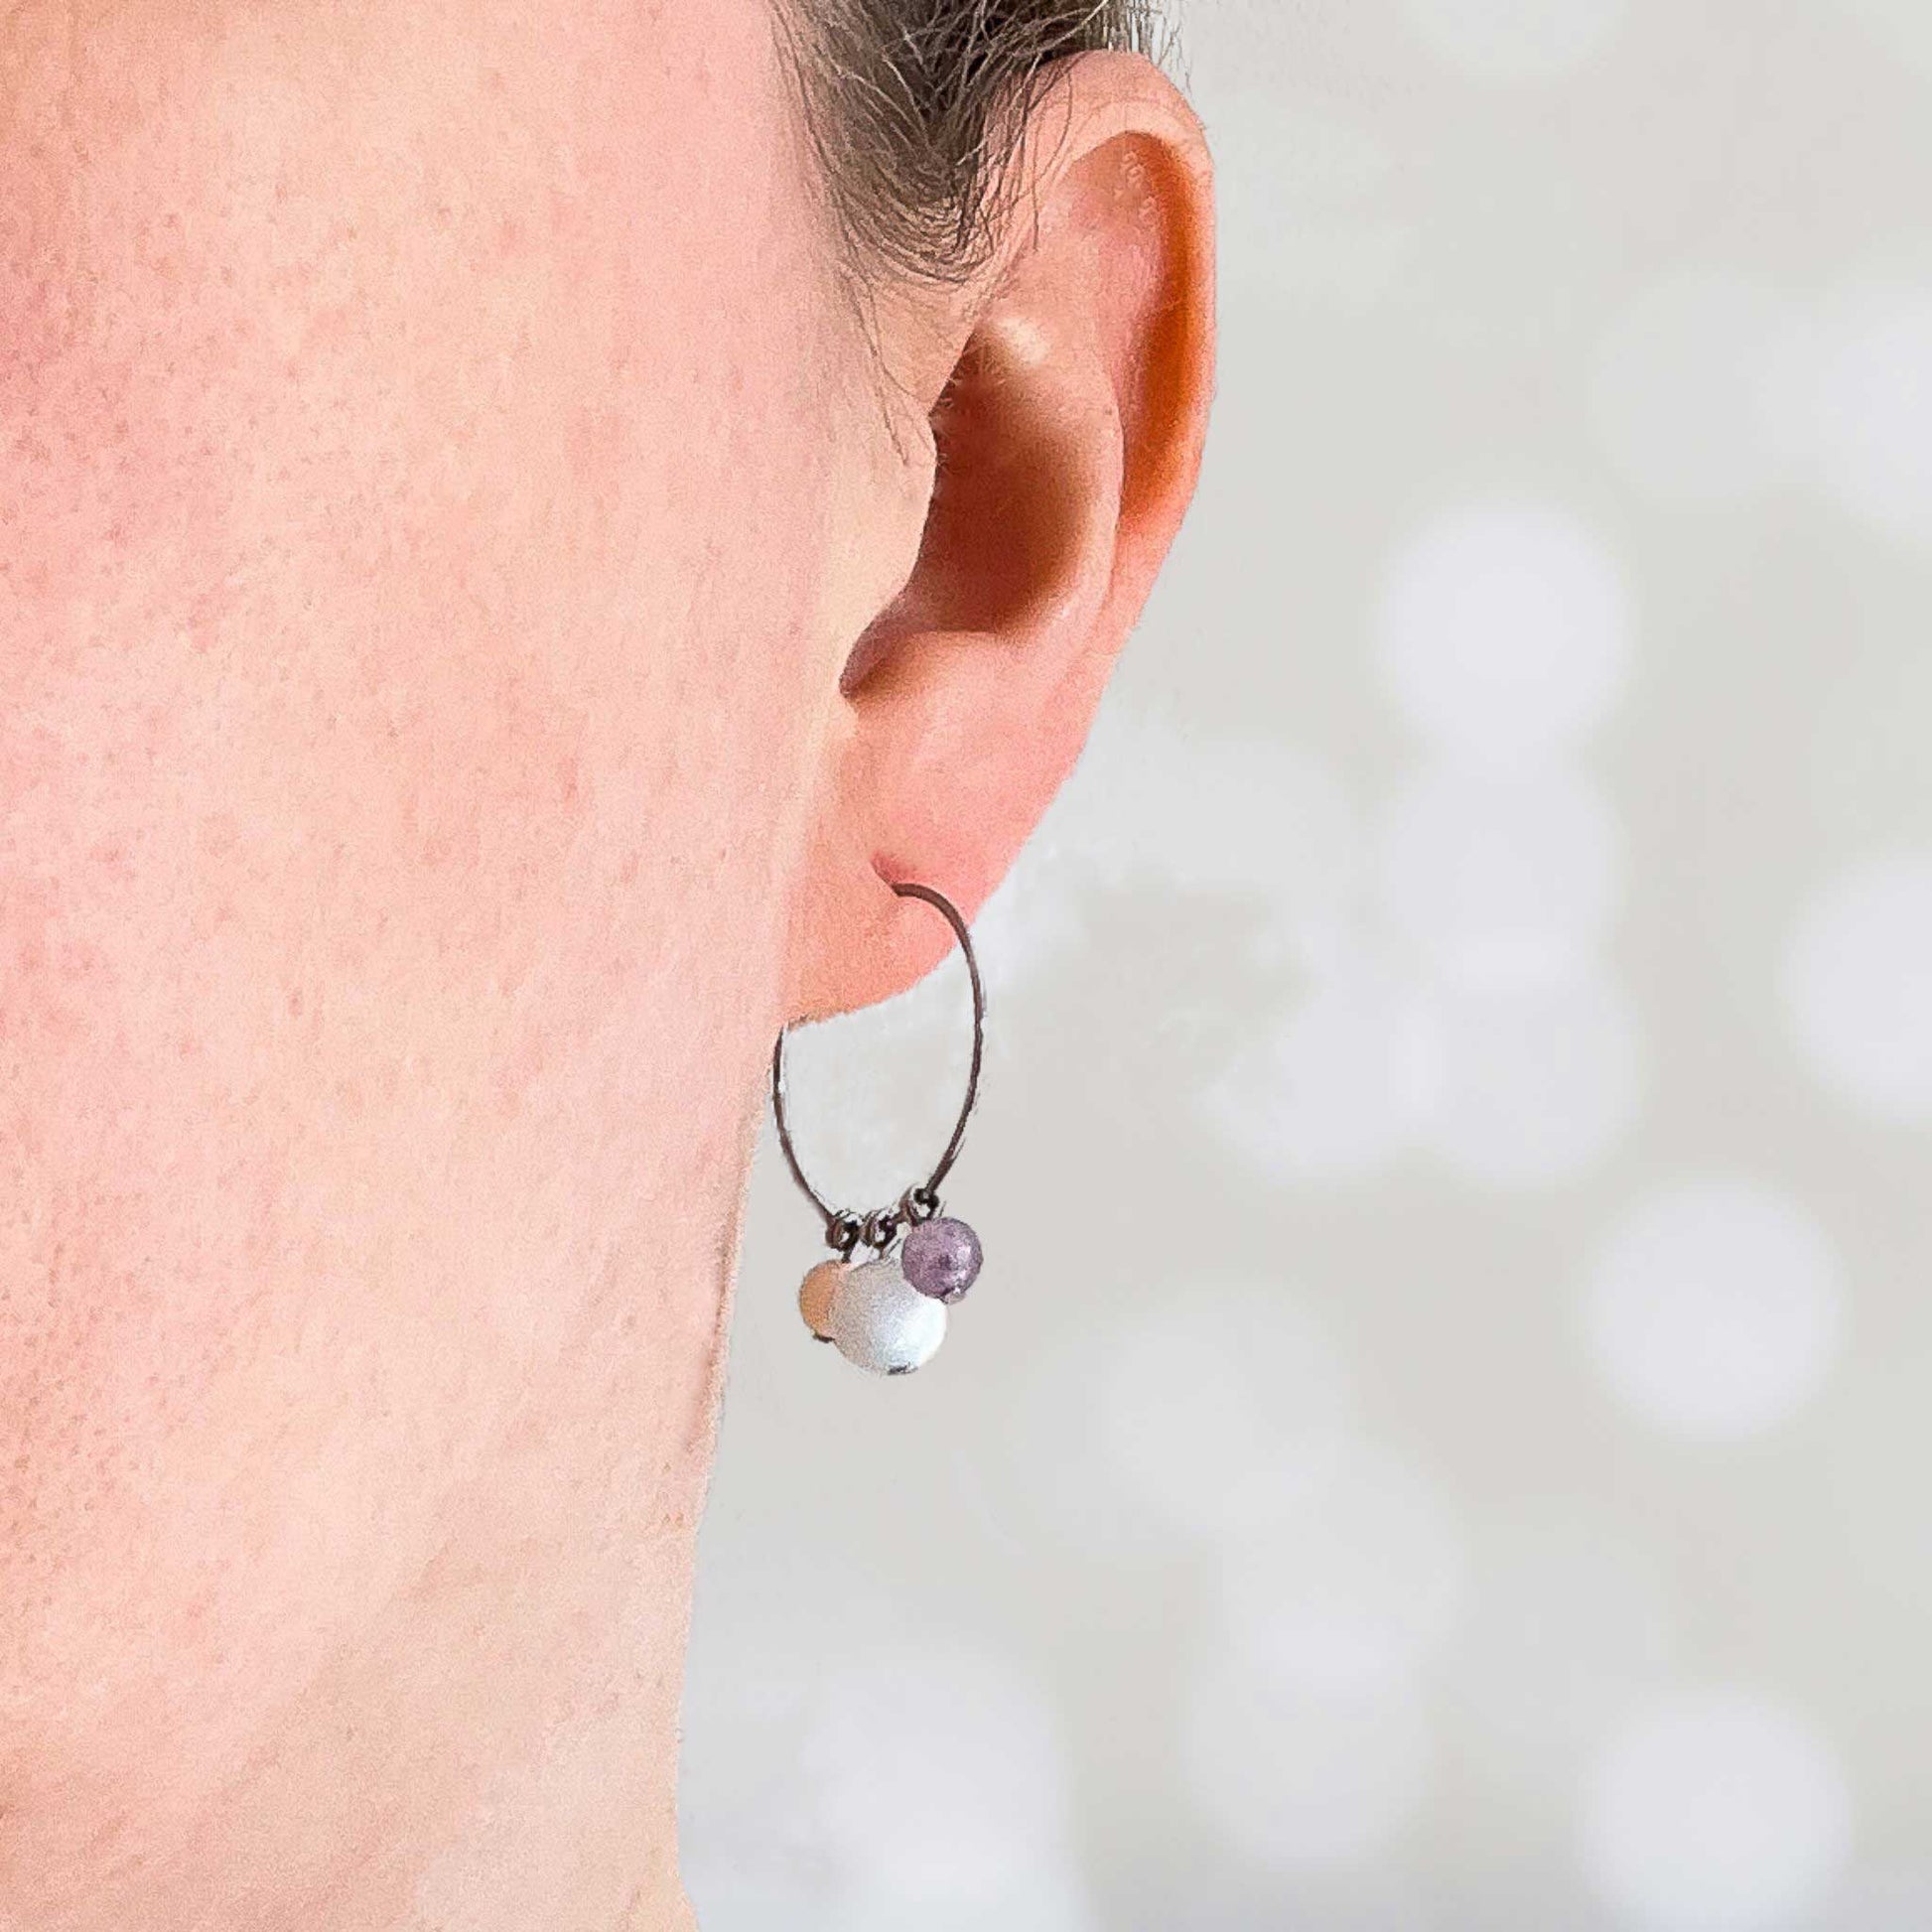 Woman wearing pastel gemstone beaded hoop earring in earlobe